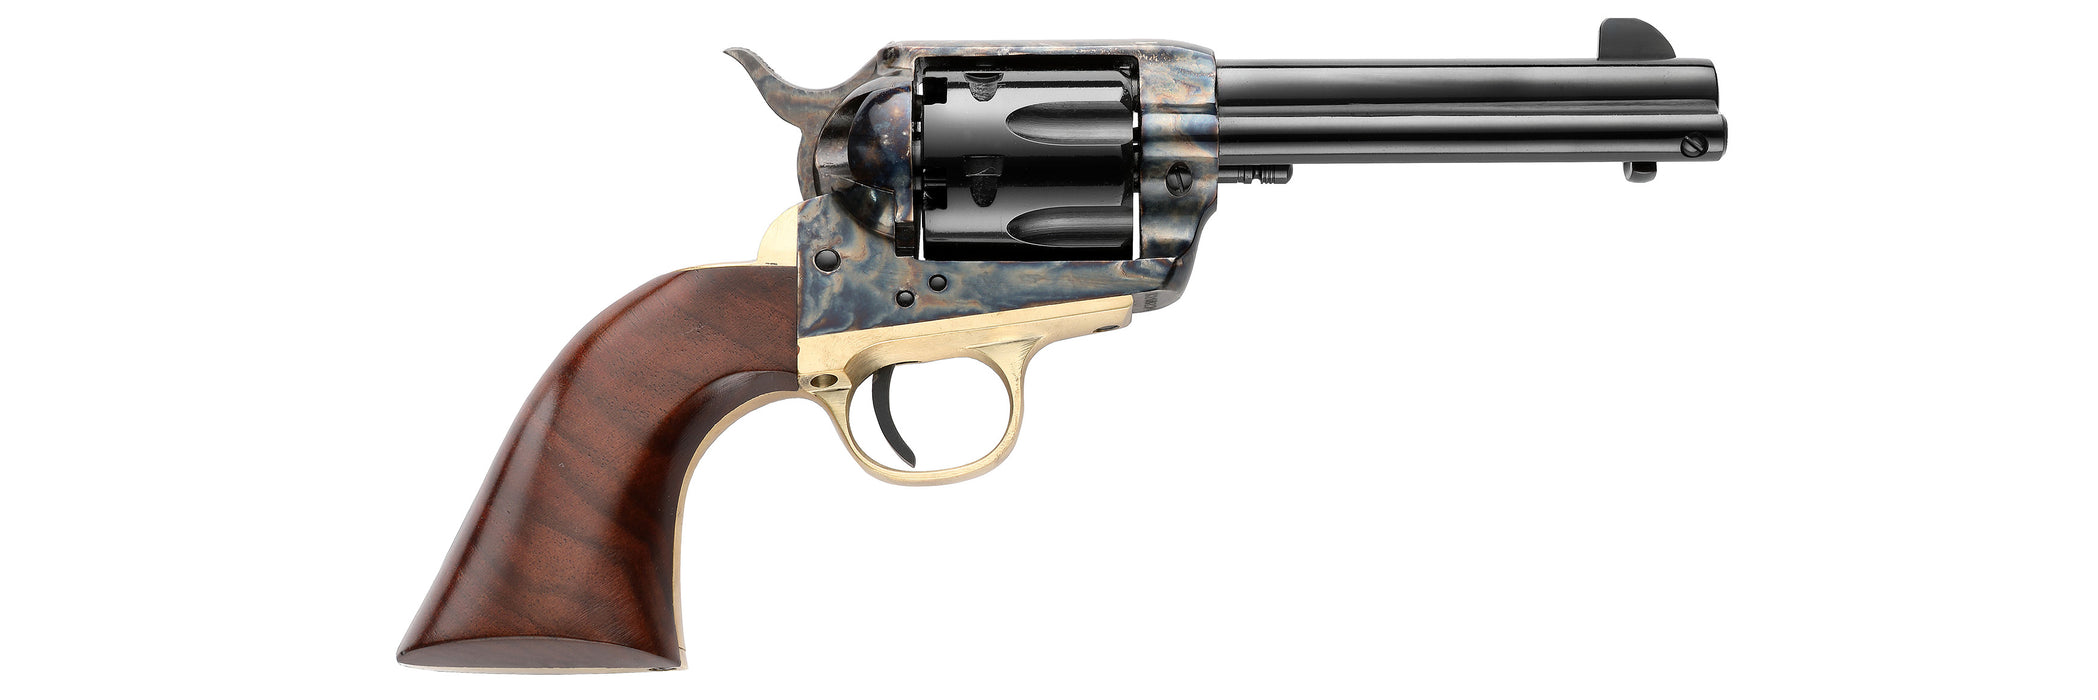 Pietta 1873 Black Powder Revolver 5.5 Inch Barrel